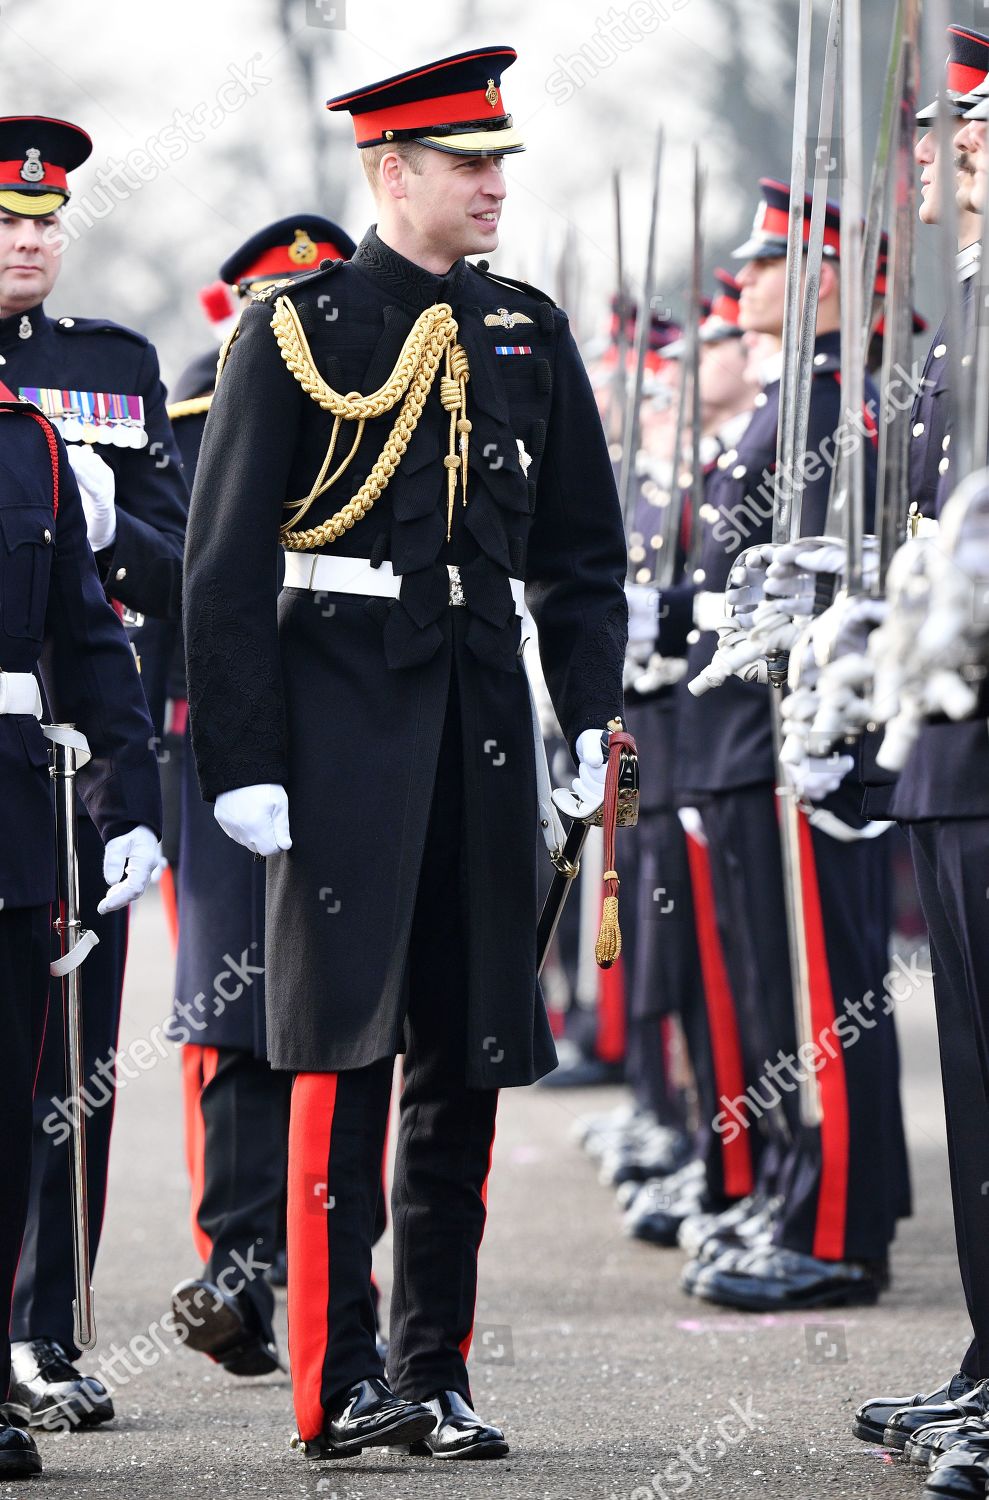 sovereigns-parade-at-the-royal-military-academy-sandhurst-berkshire-uk-shutterstock-editorial-10033849ab.jpg